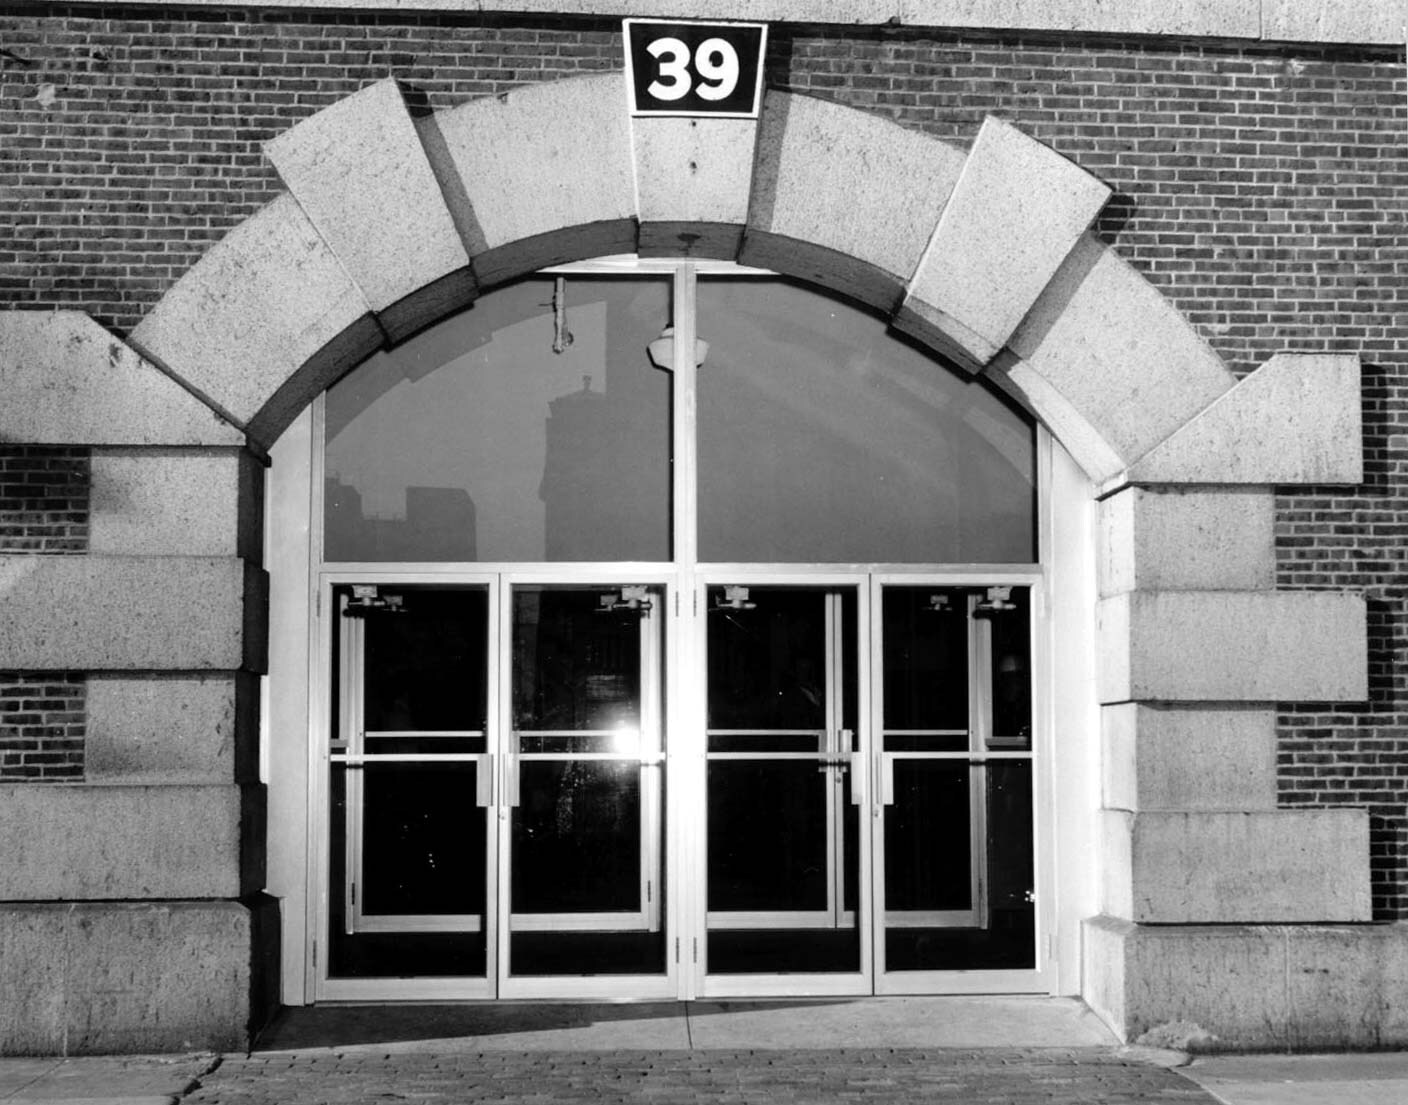 Entrance to Building 39 at Charlestown Navy Yard.